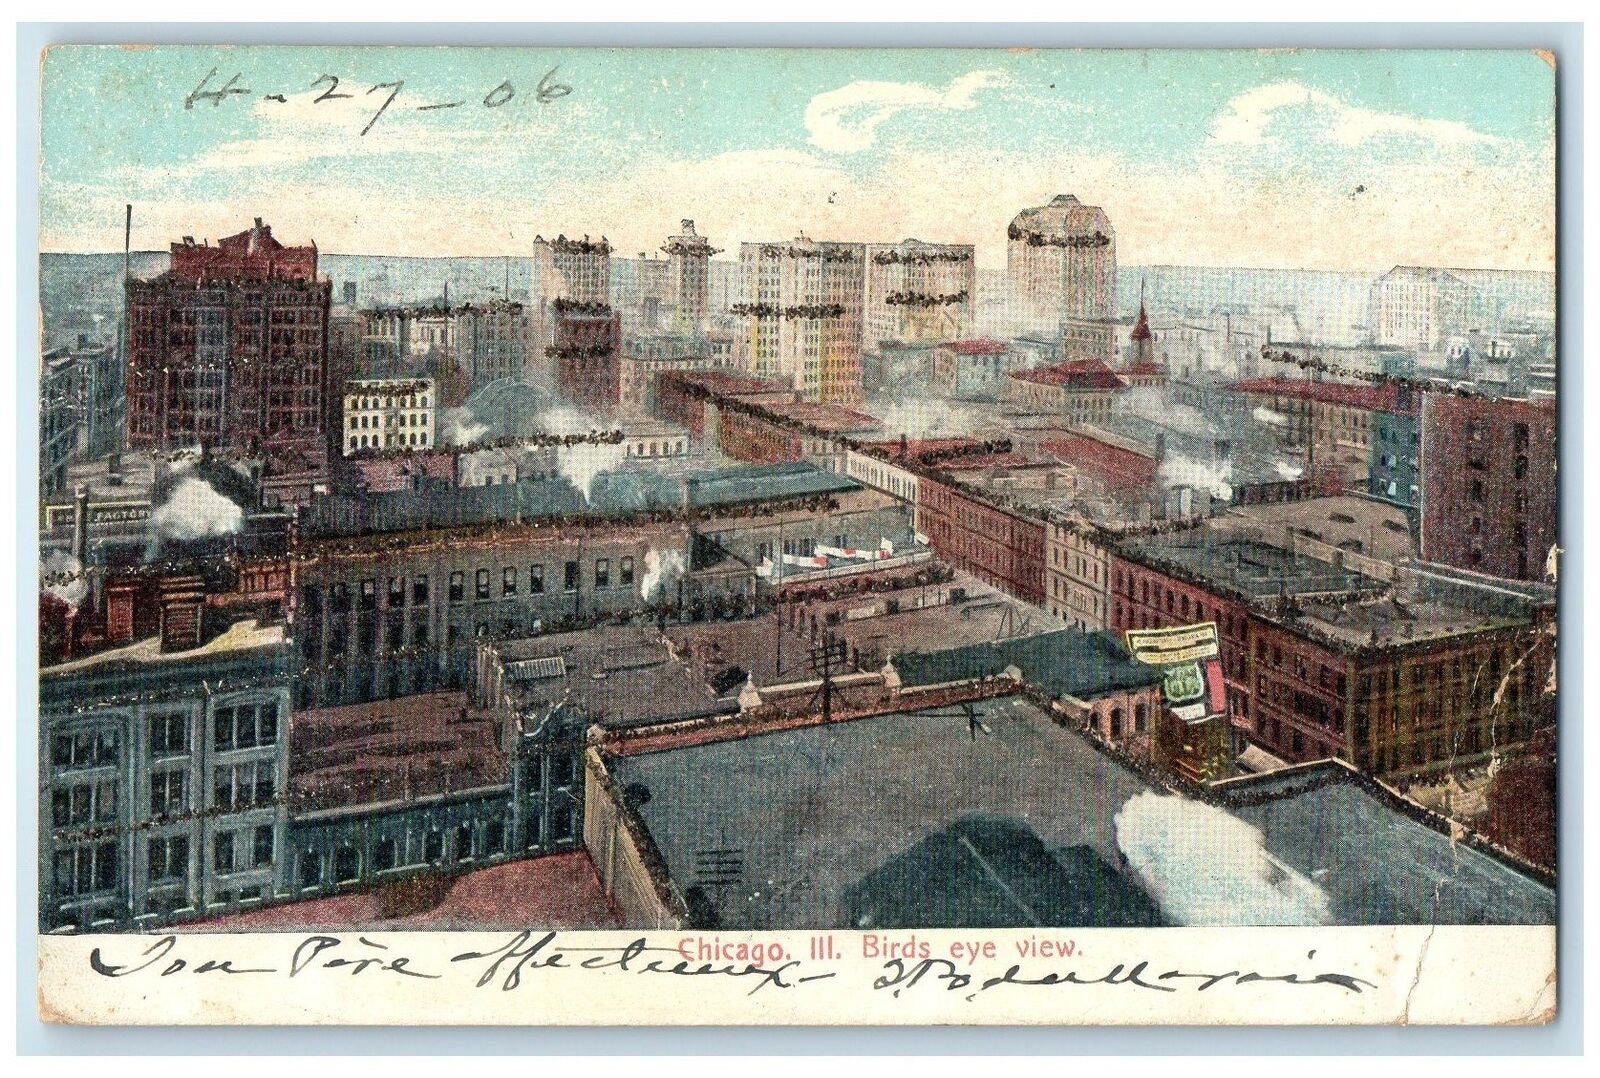 1906 Birds Eye View Buildings Tower Establishments Chicago Illinois IL Postcard